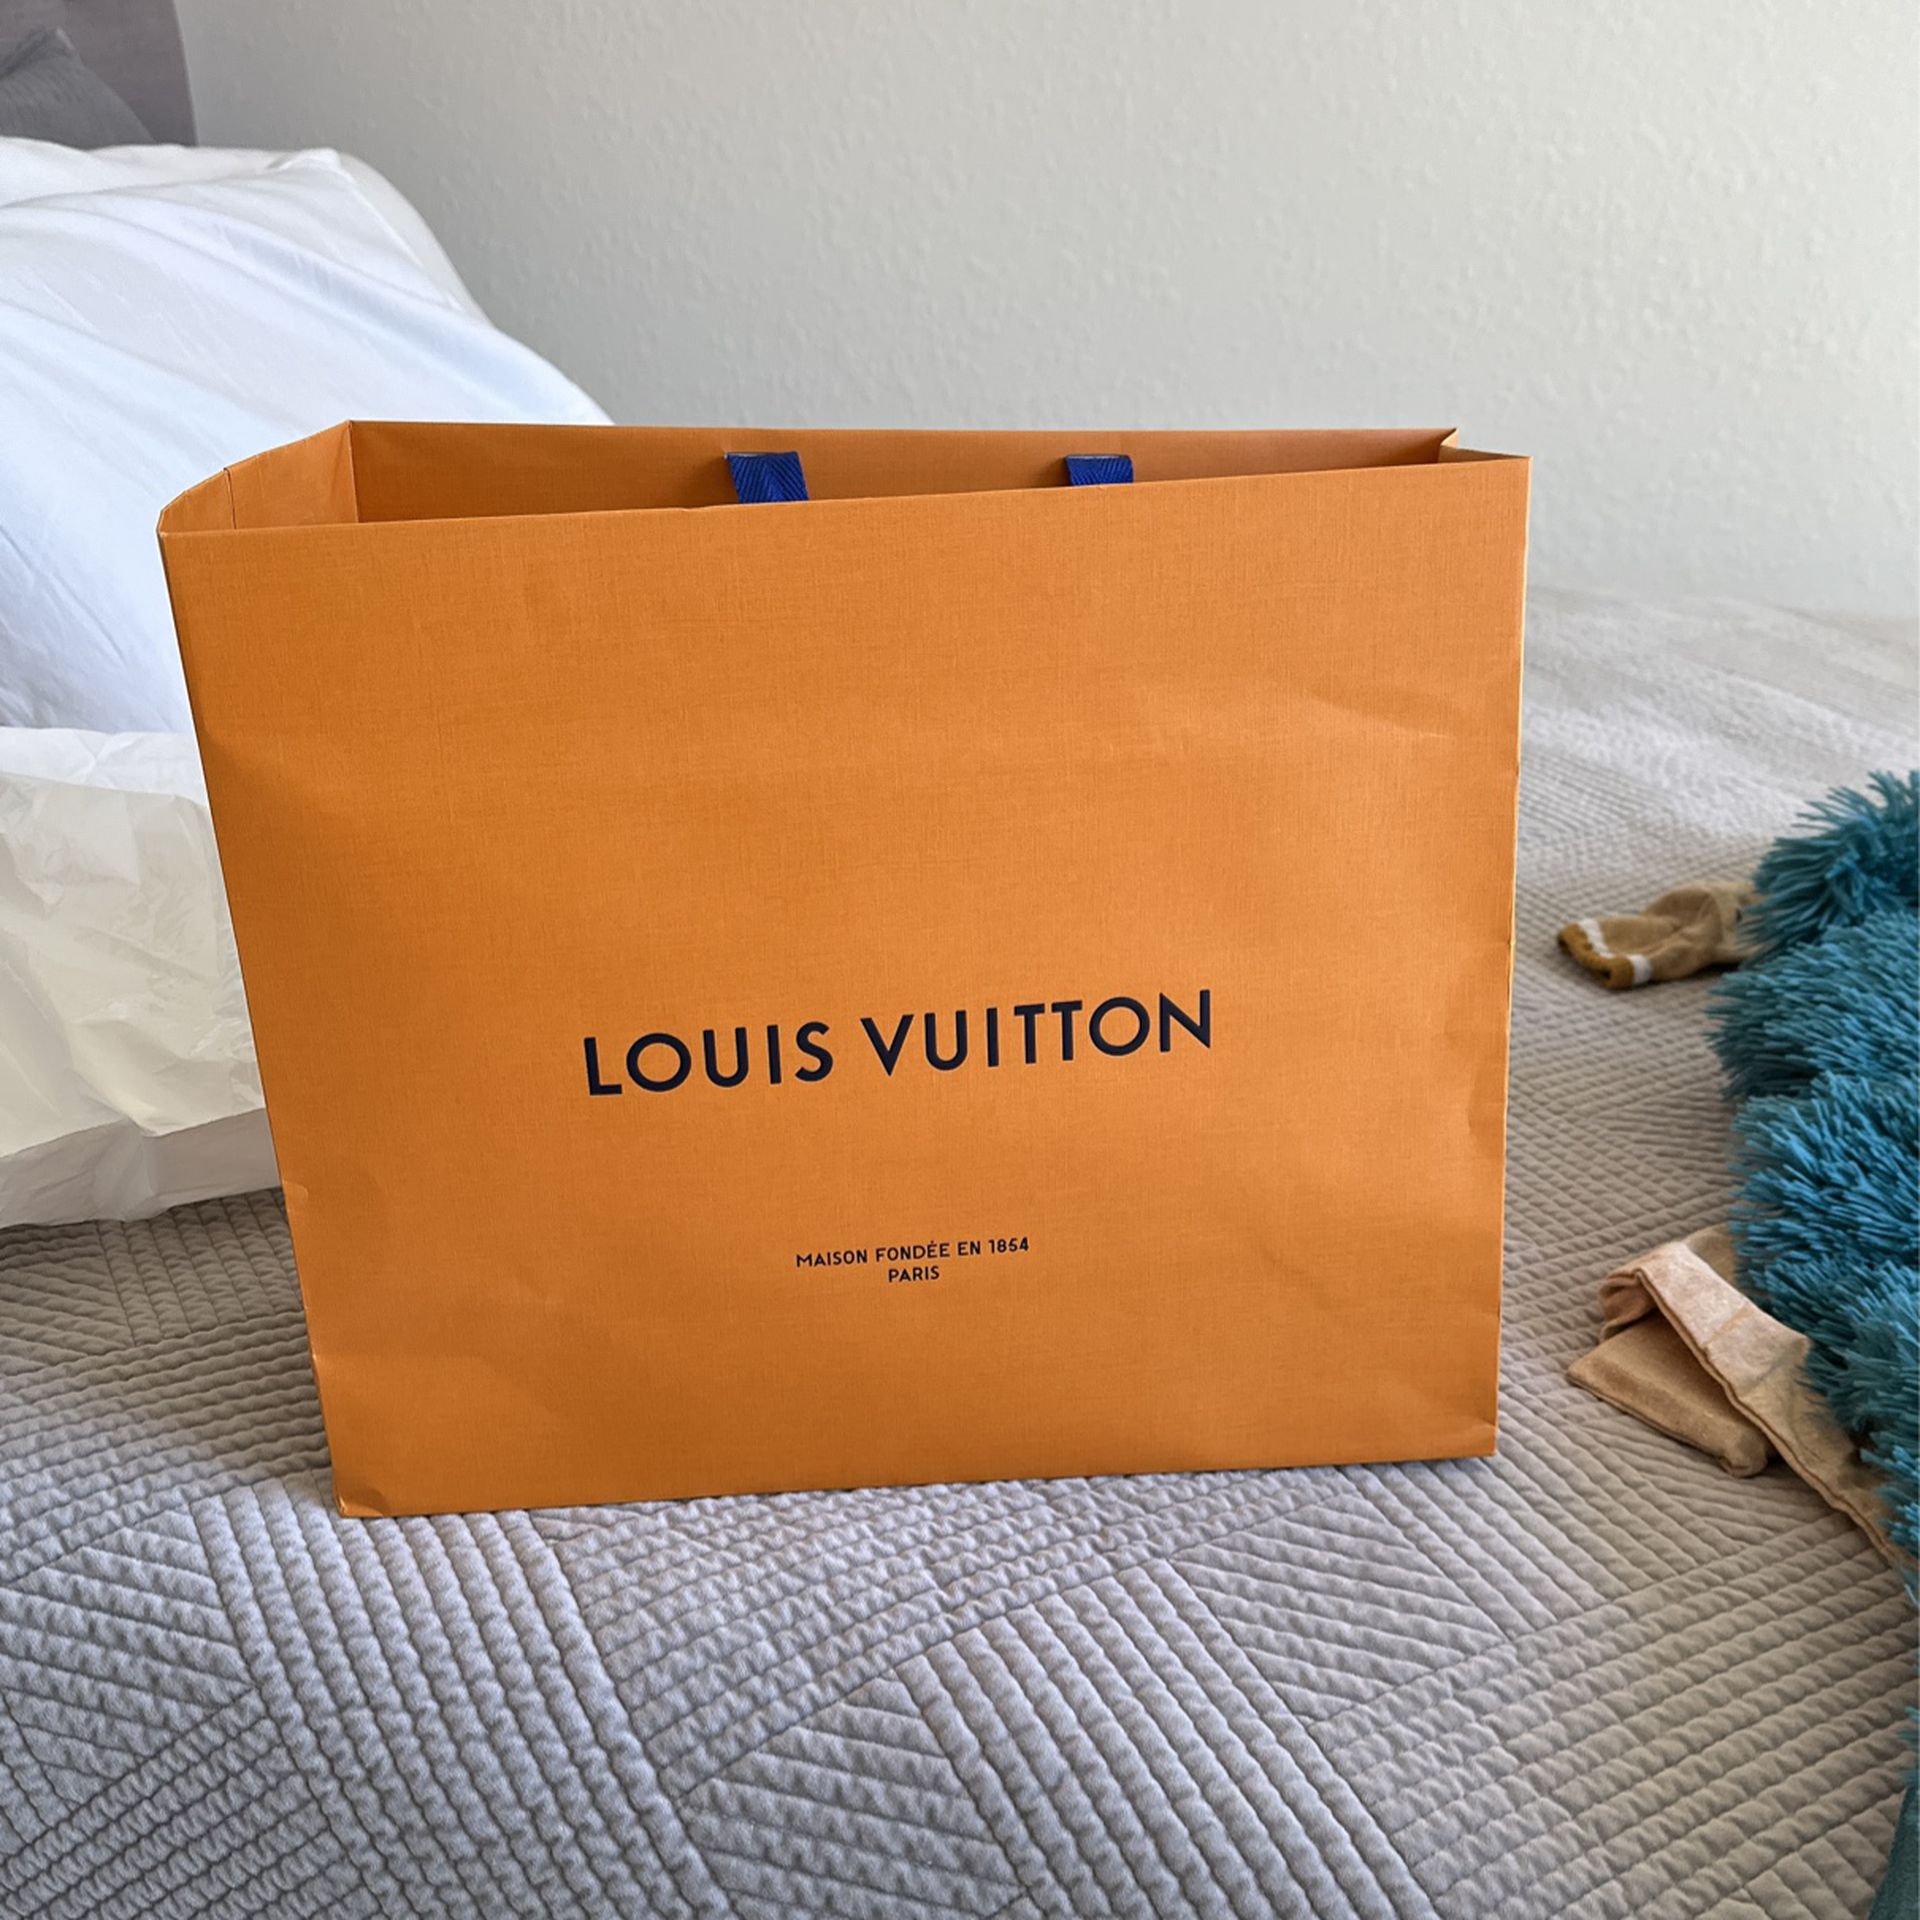 Authentic Louis Vuitton Cabas Mezzo Shoulder Bag for Sale in Lake Worth, FL  - OfferUp